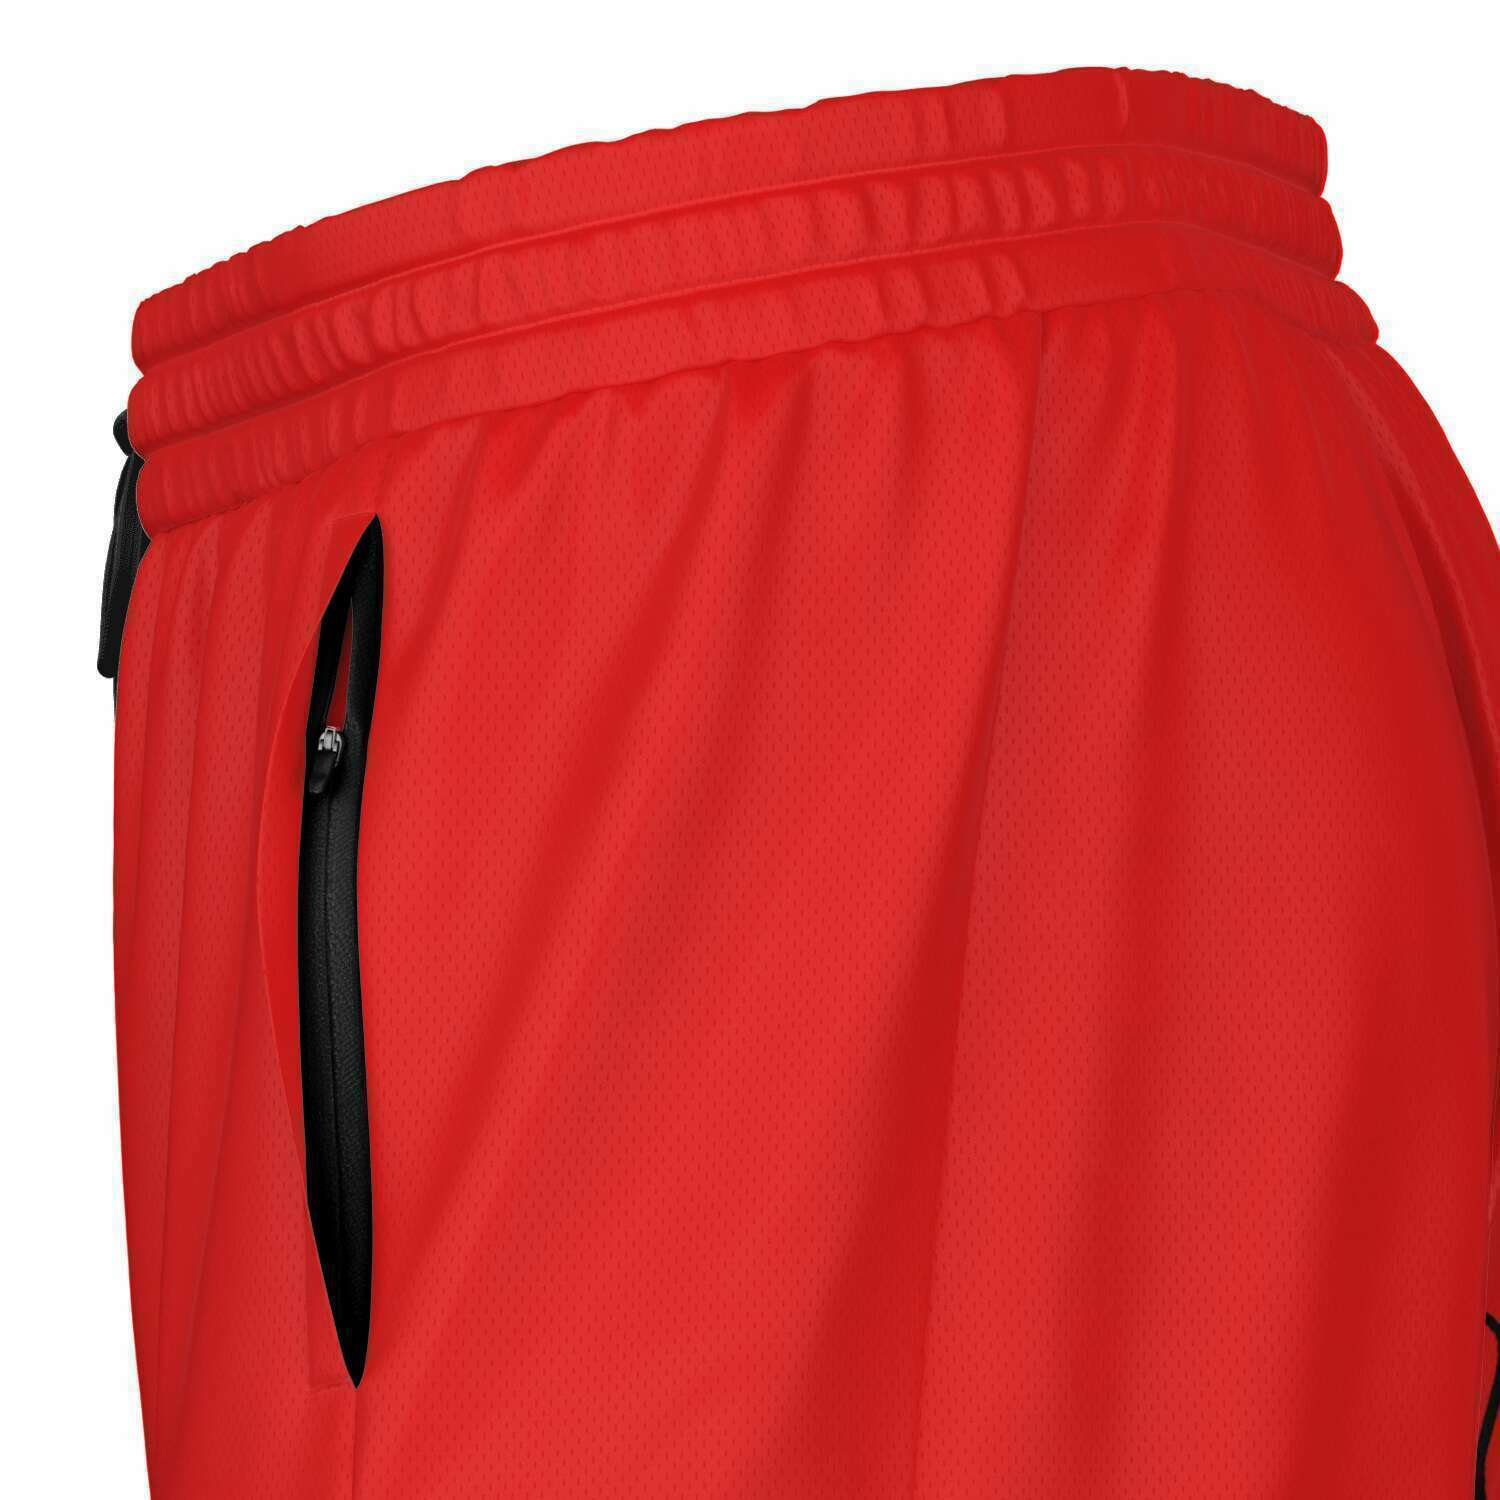 Red Black Pinstripe Shorts